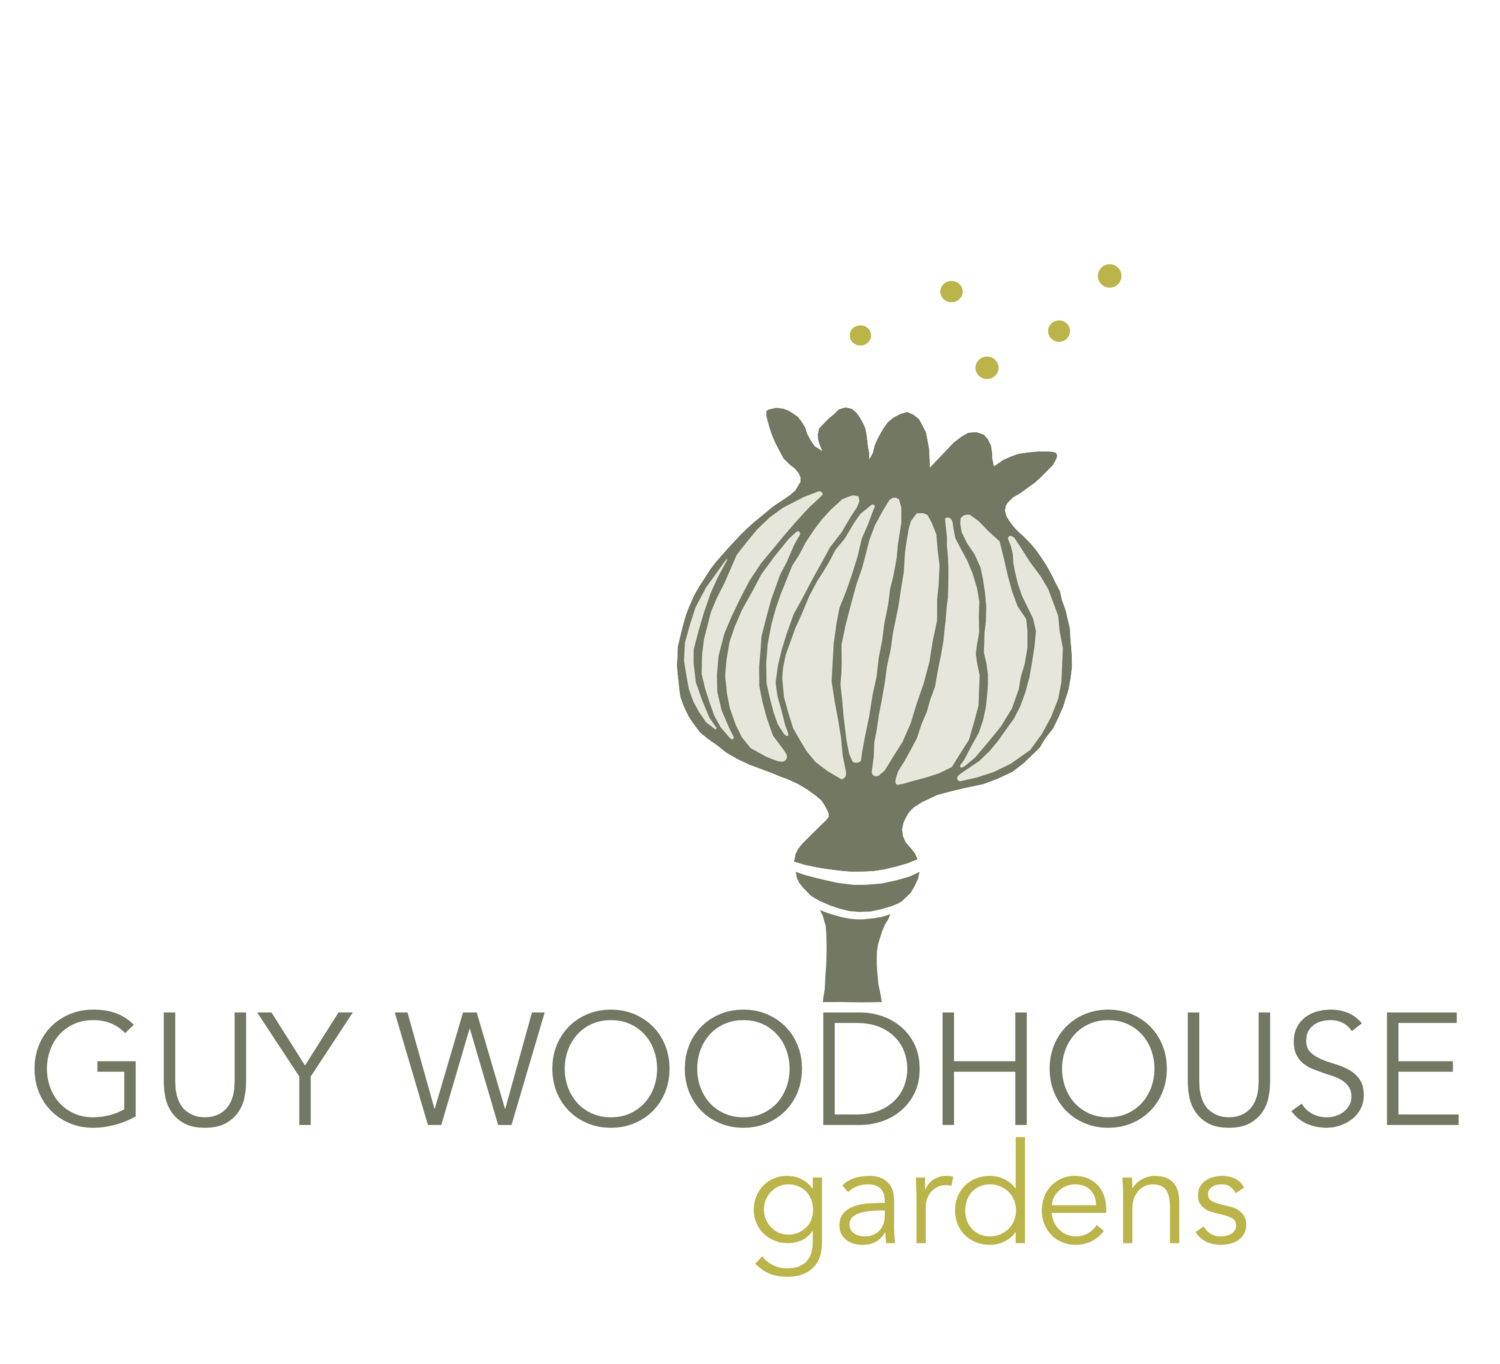 GUY WOODHOUSE GARDENS LTD